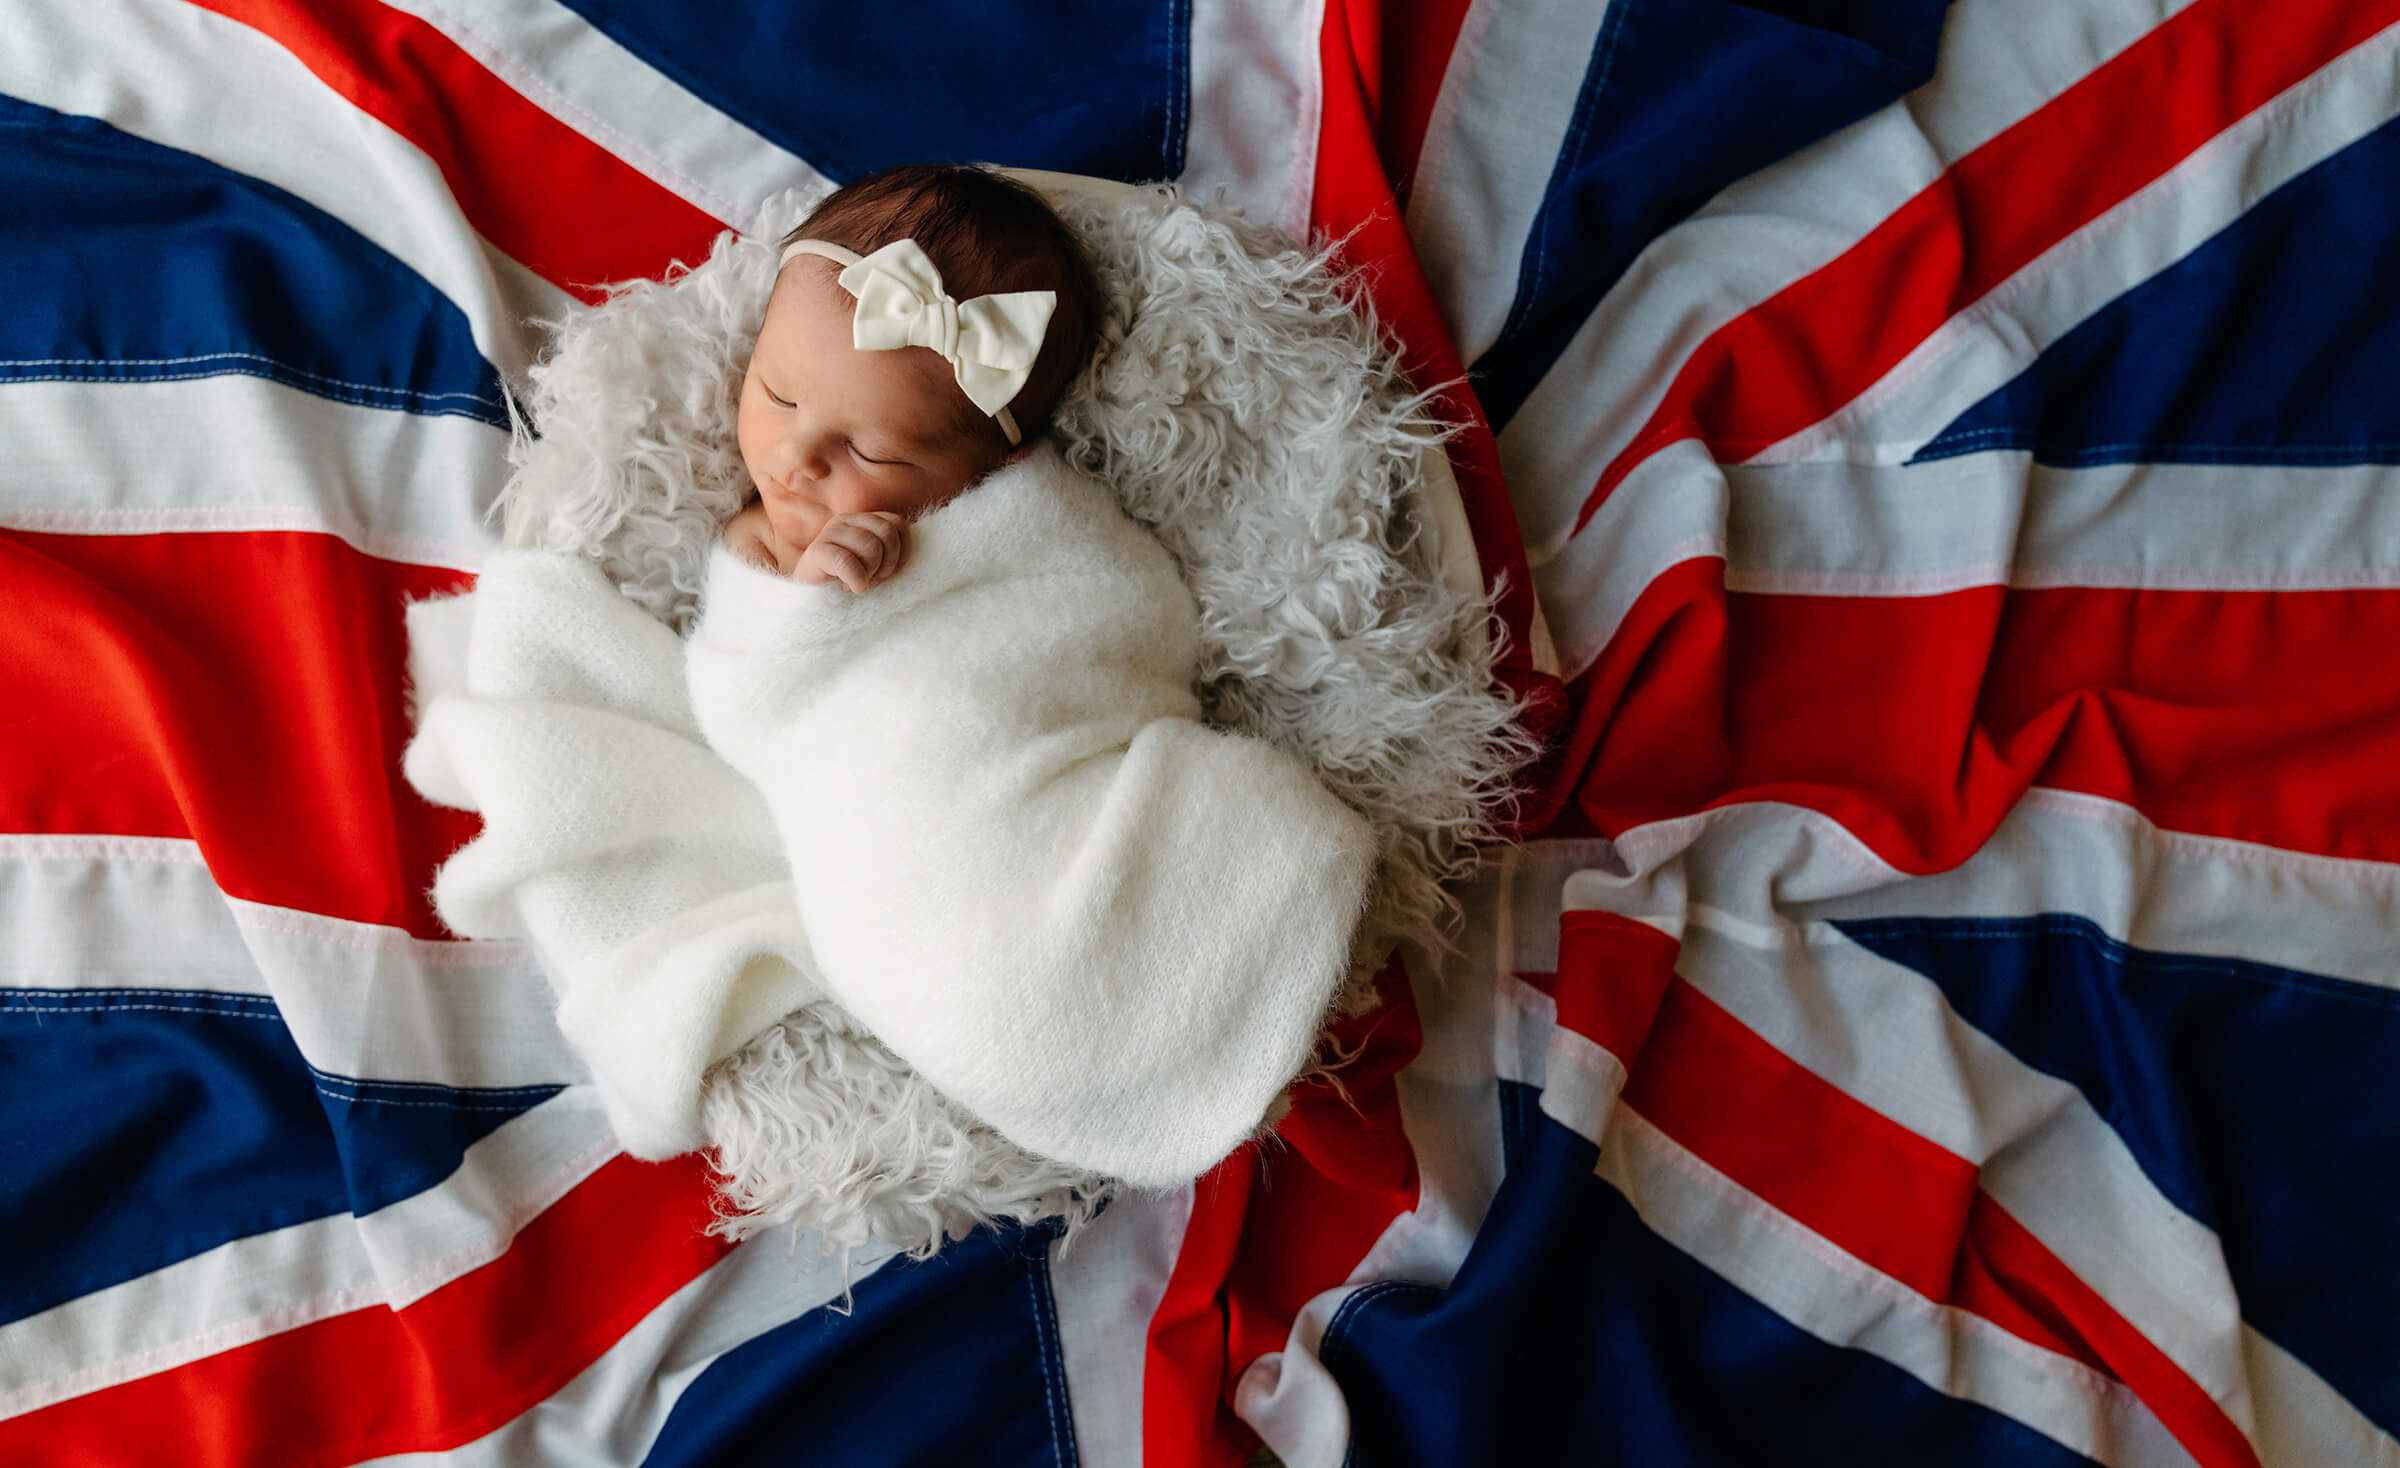 newborn session using Union Jack flag